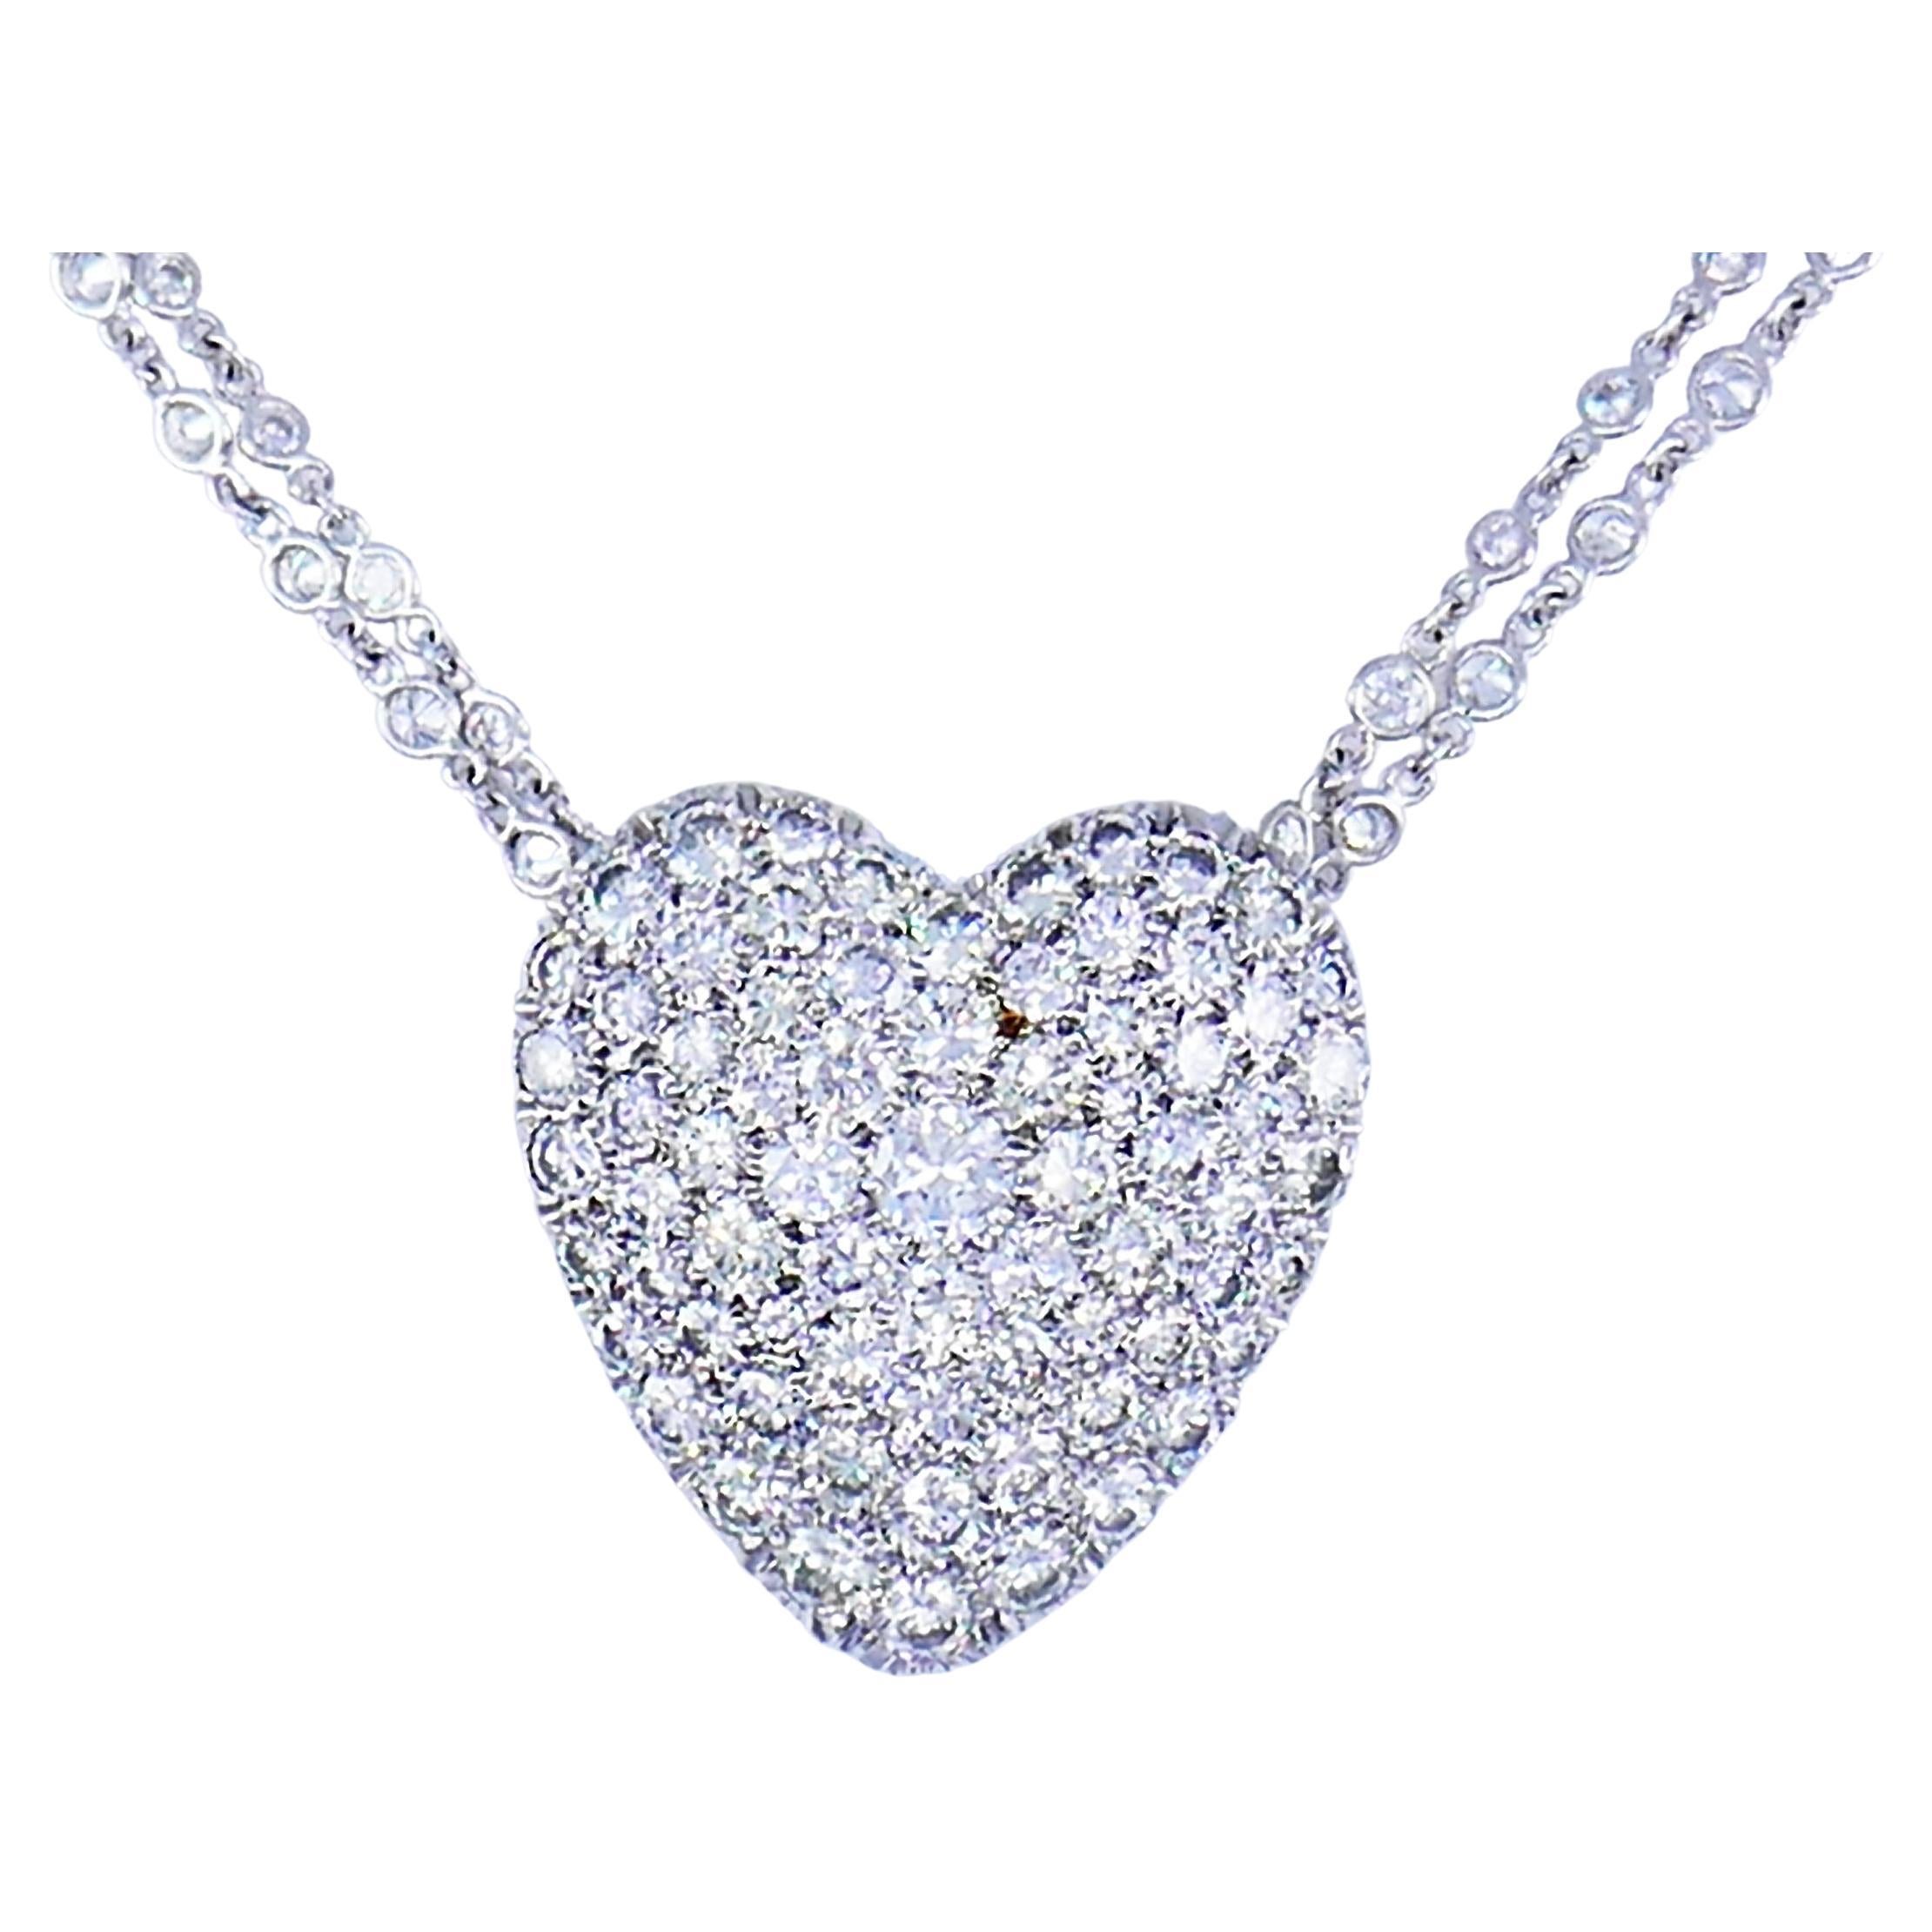 Vintage Diamond Heart 14k Gold Necklace Pendant Pin Brooch Estate Jewelry